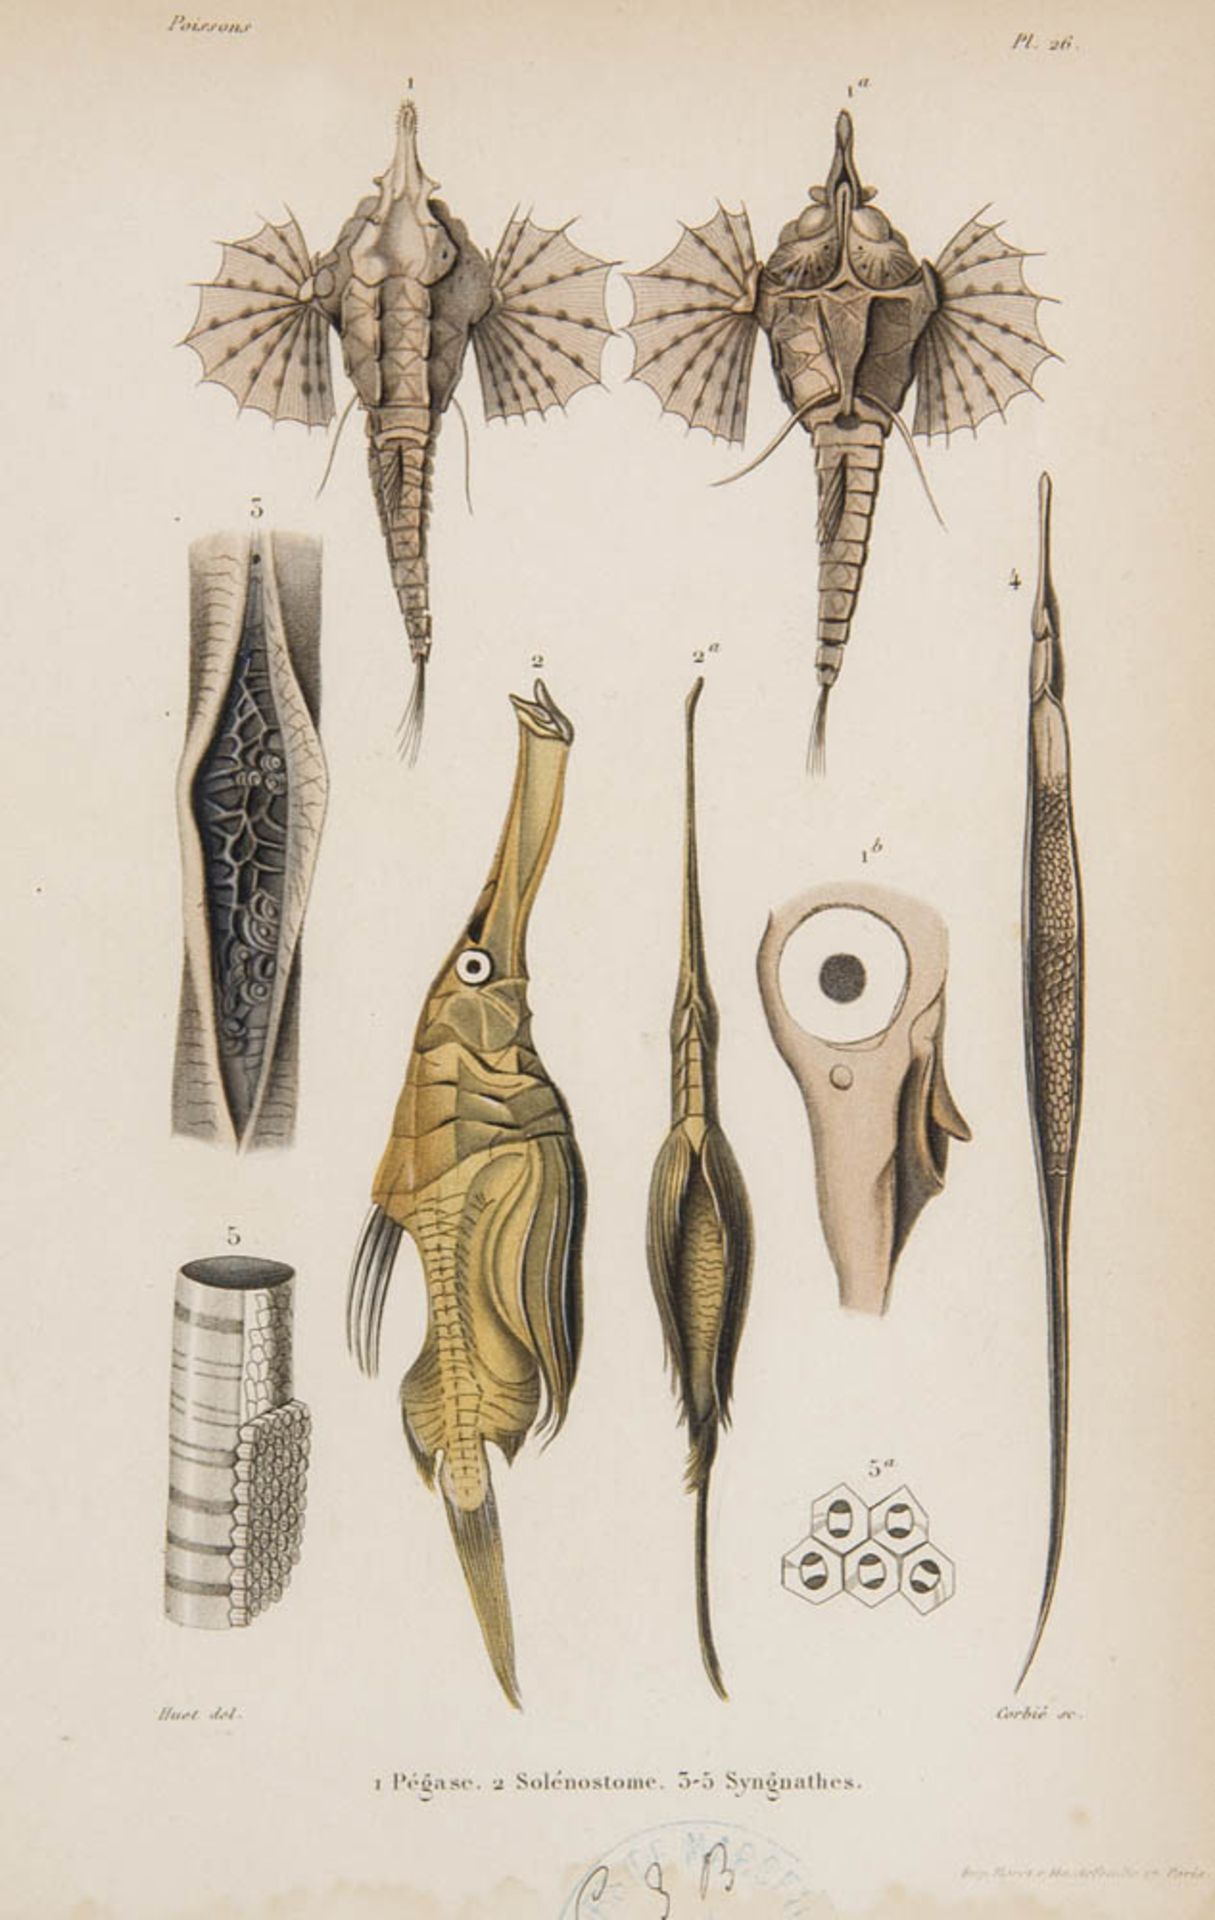 Ichthyologie - - Duméril, August Henri André. Histoire naturelle des Poissons où Ichthyologie